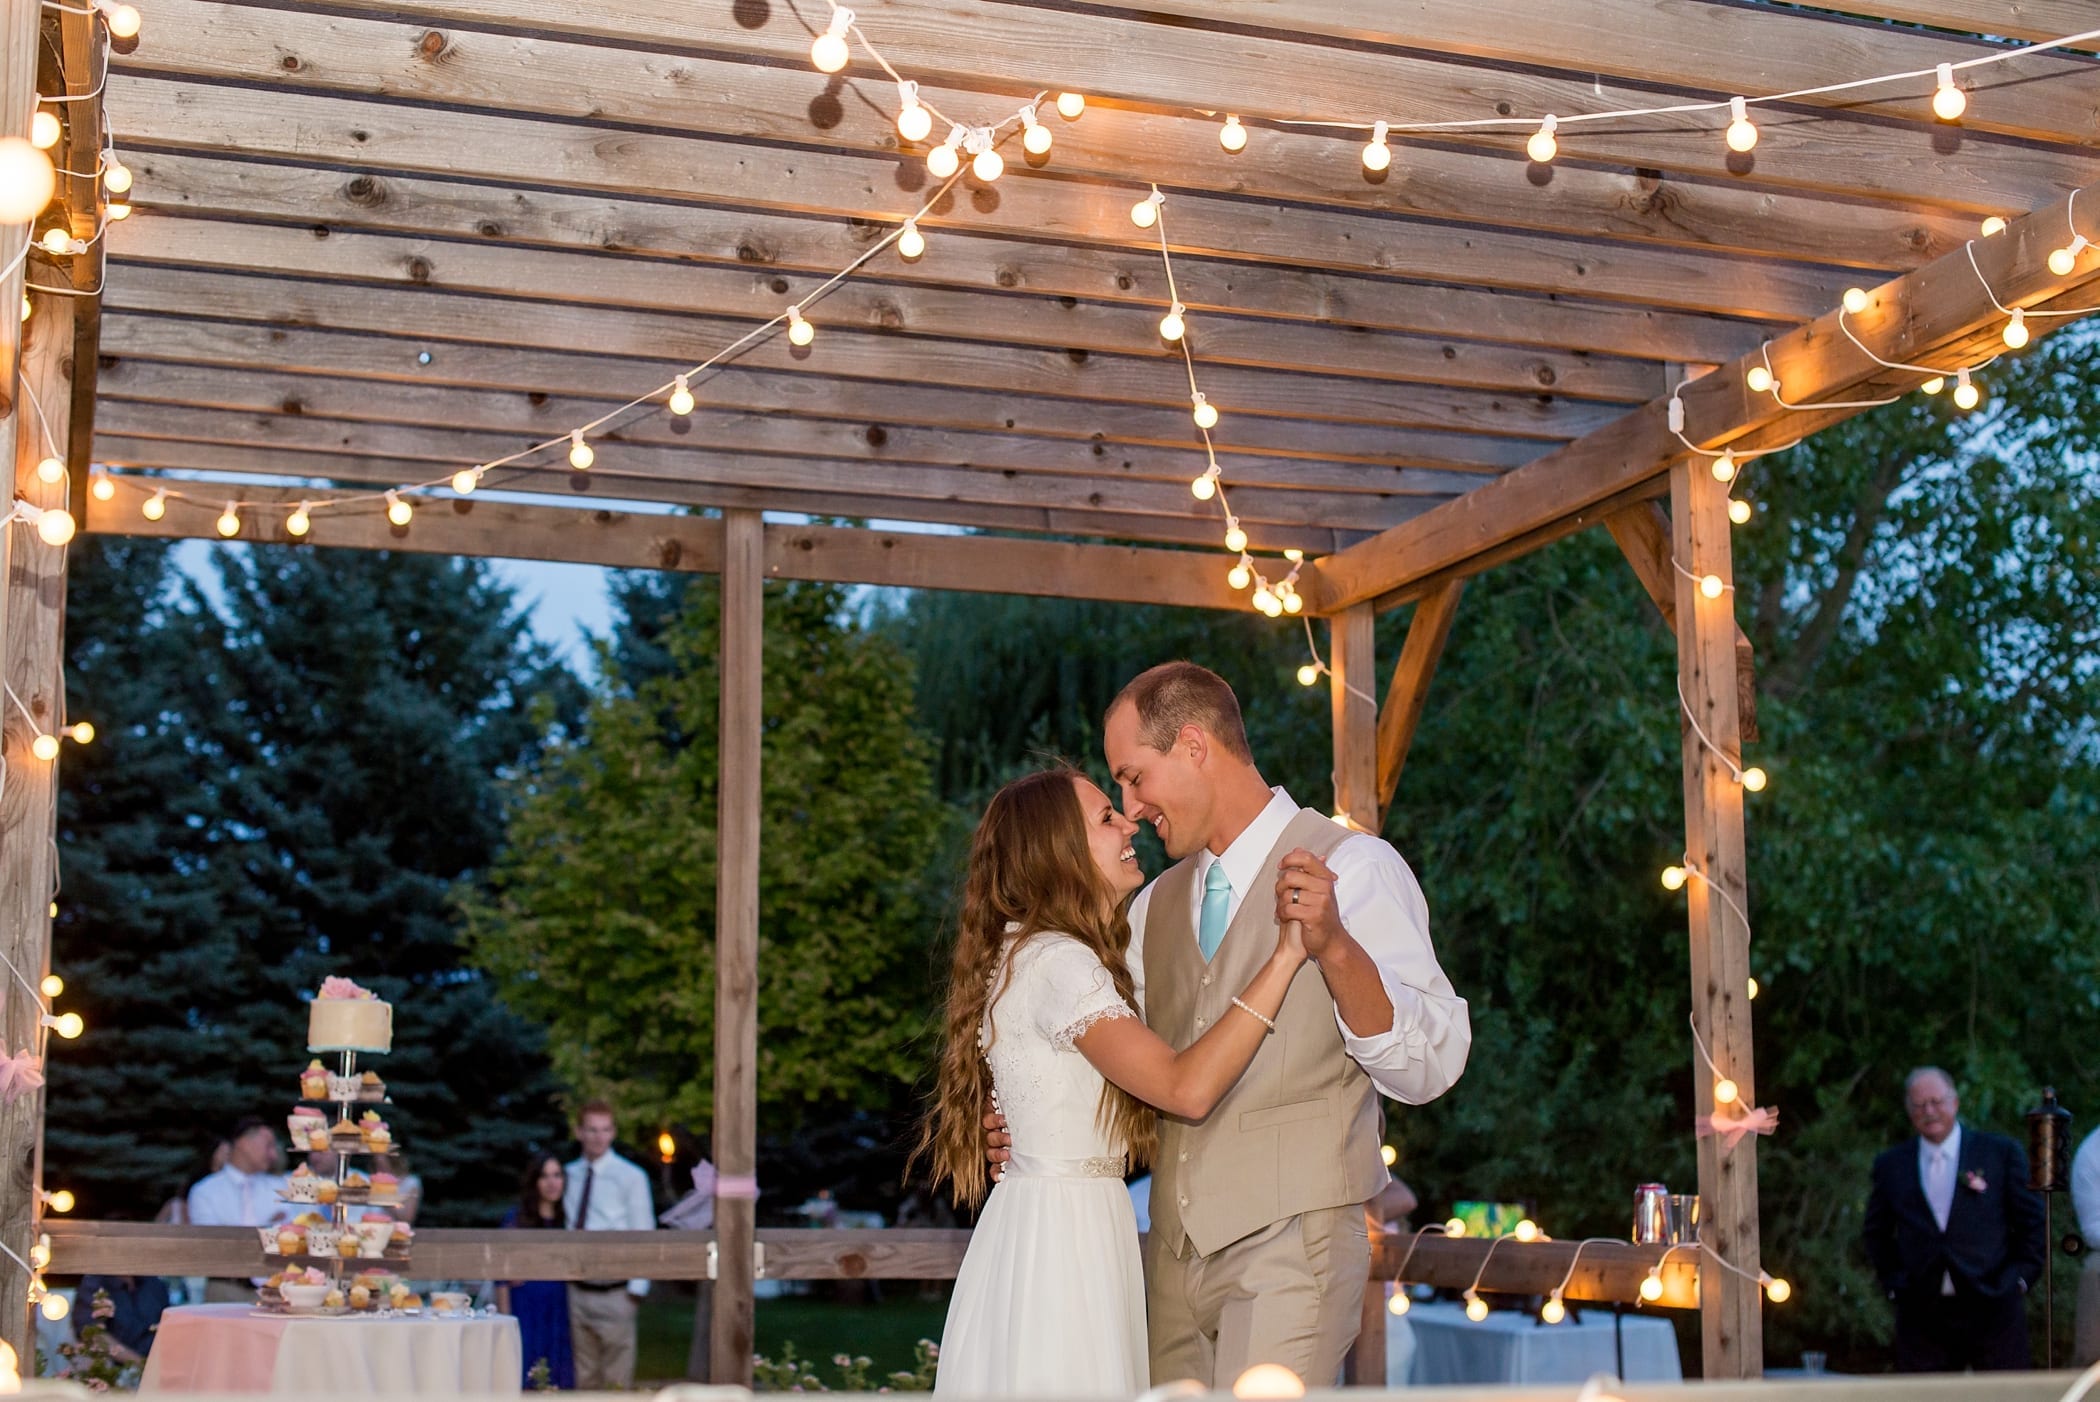 Outdoor DIY Wedding Reception by Michelle & Logan